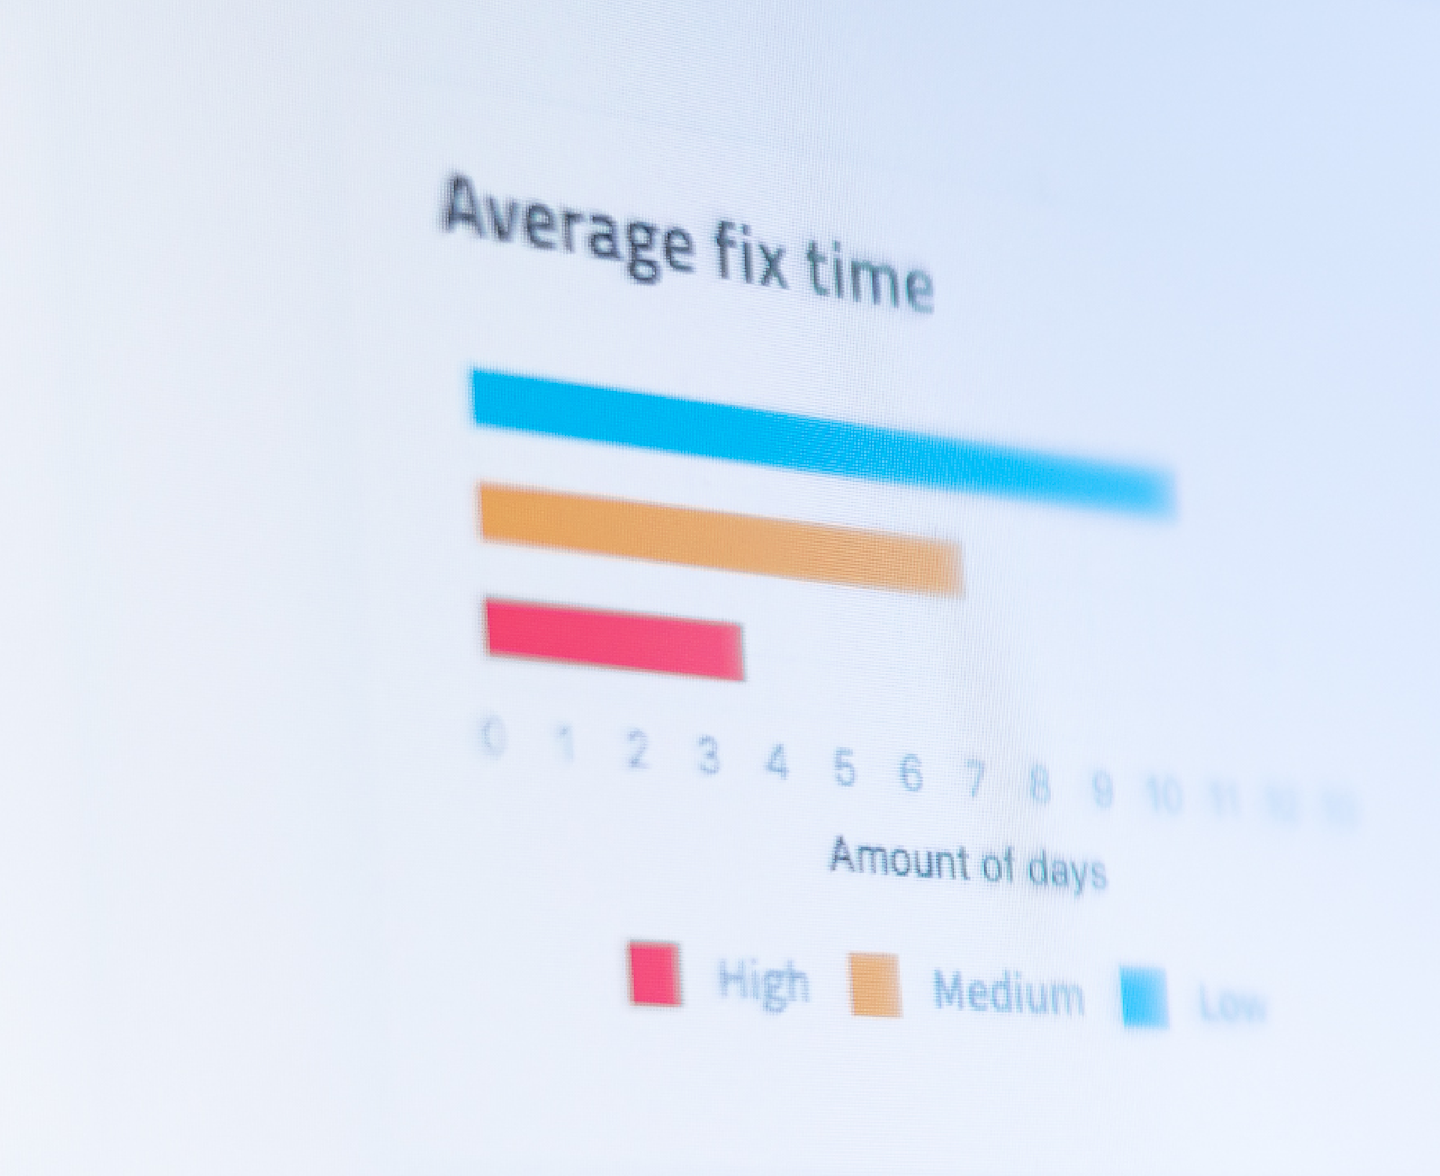 Average fix time graph